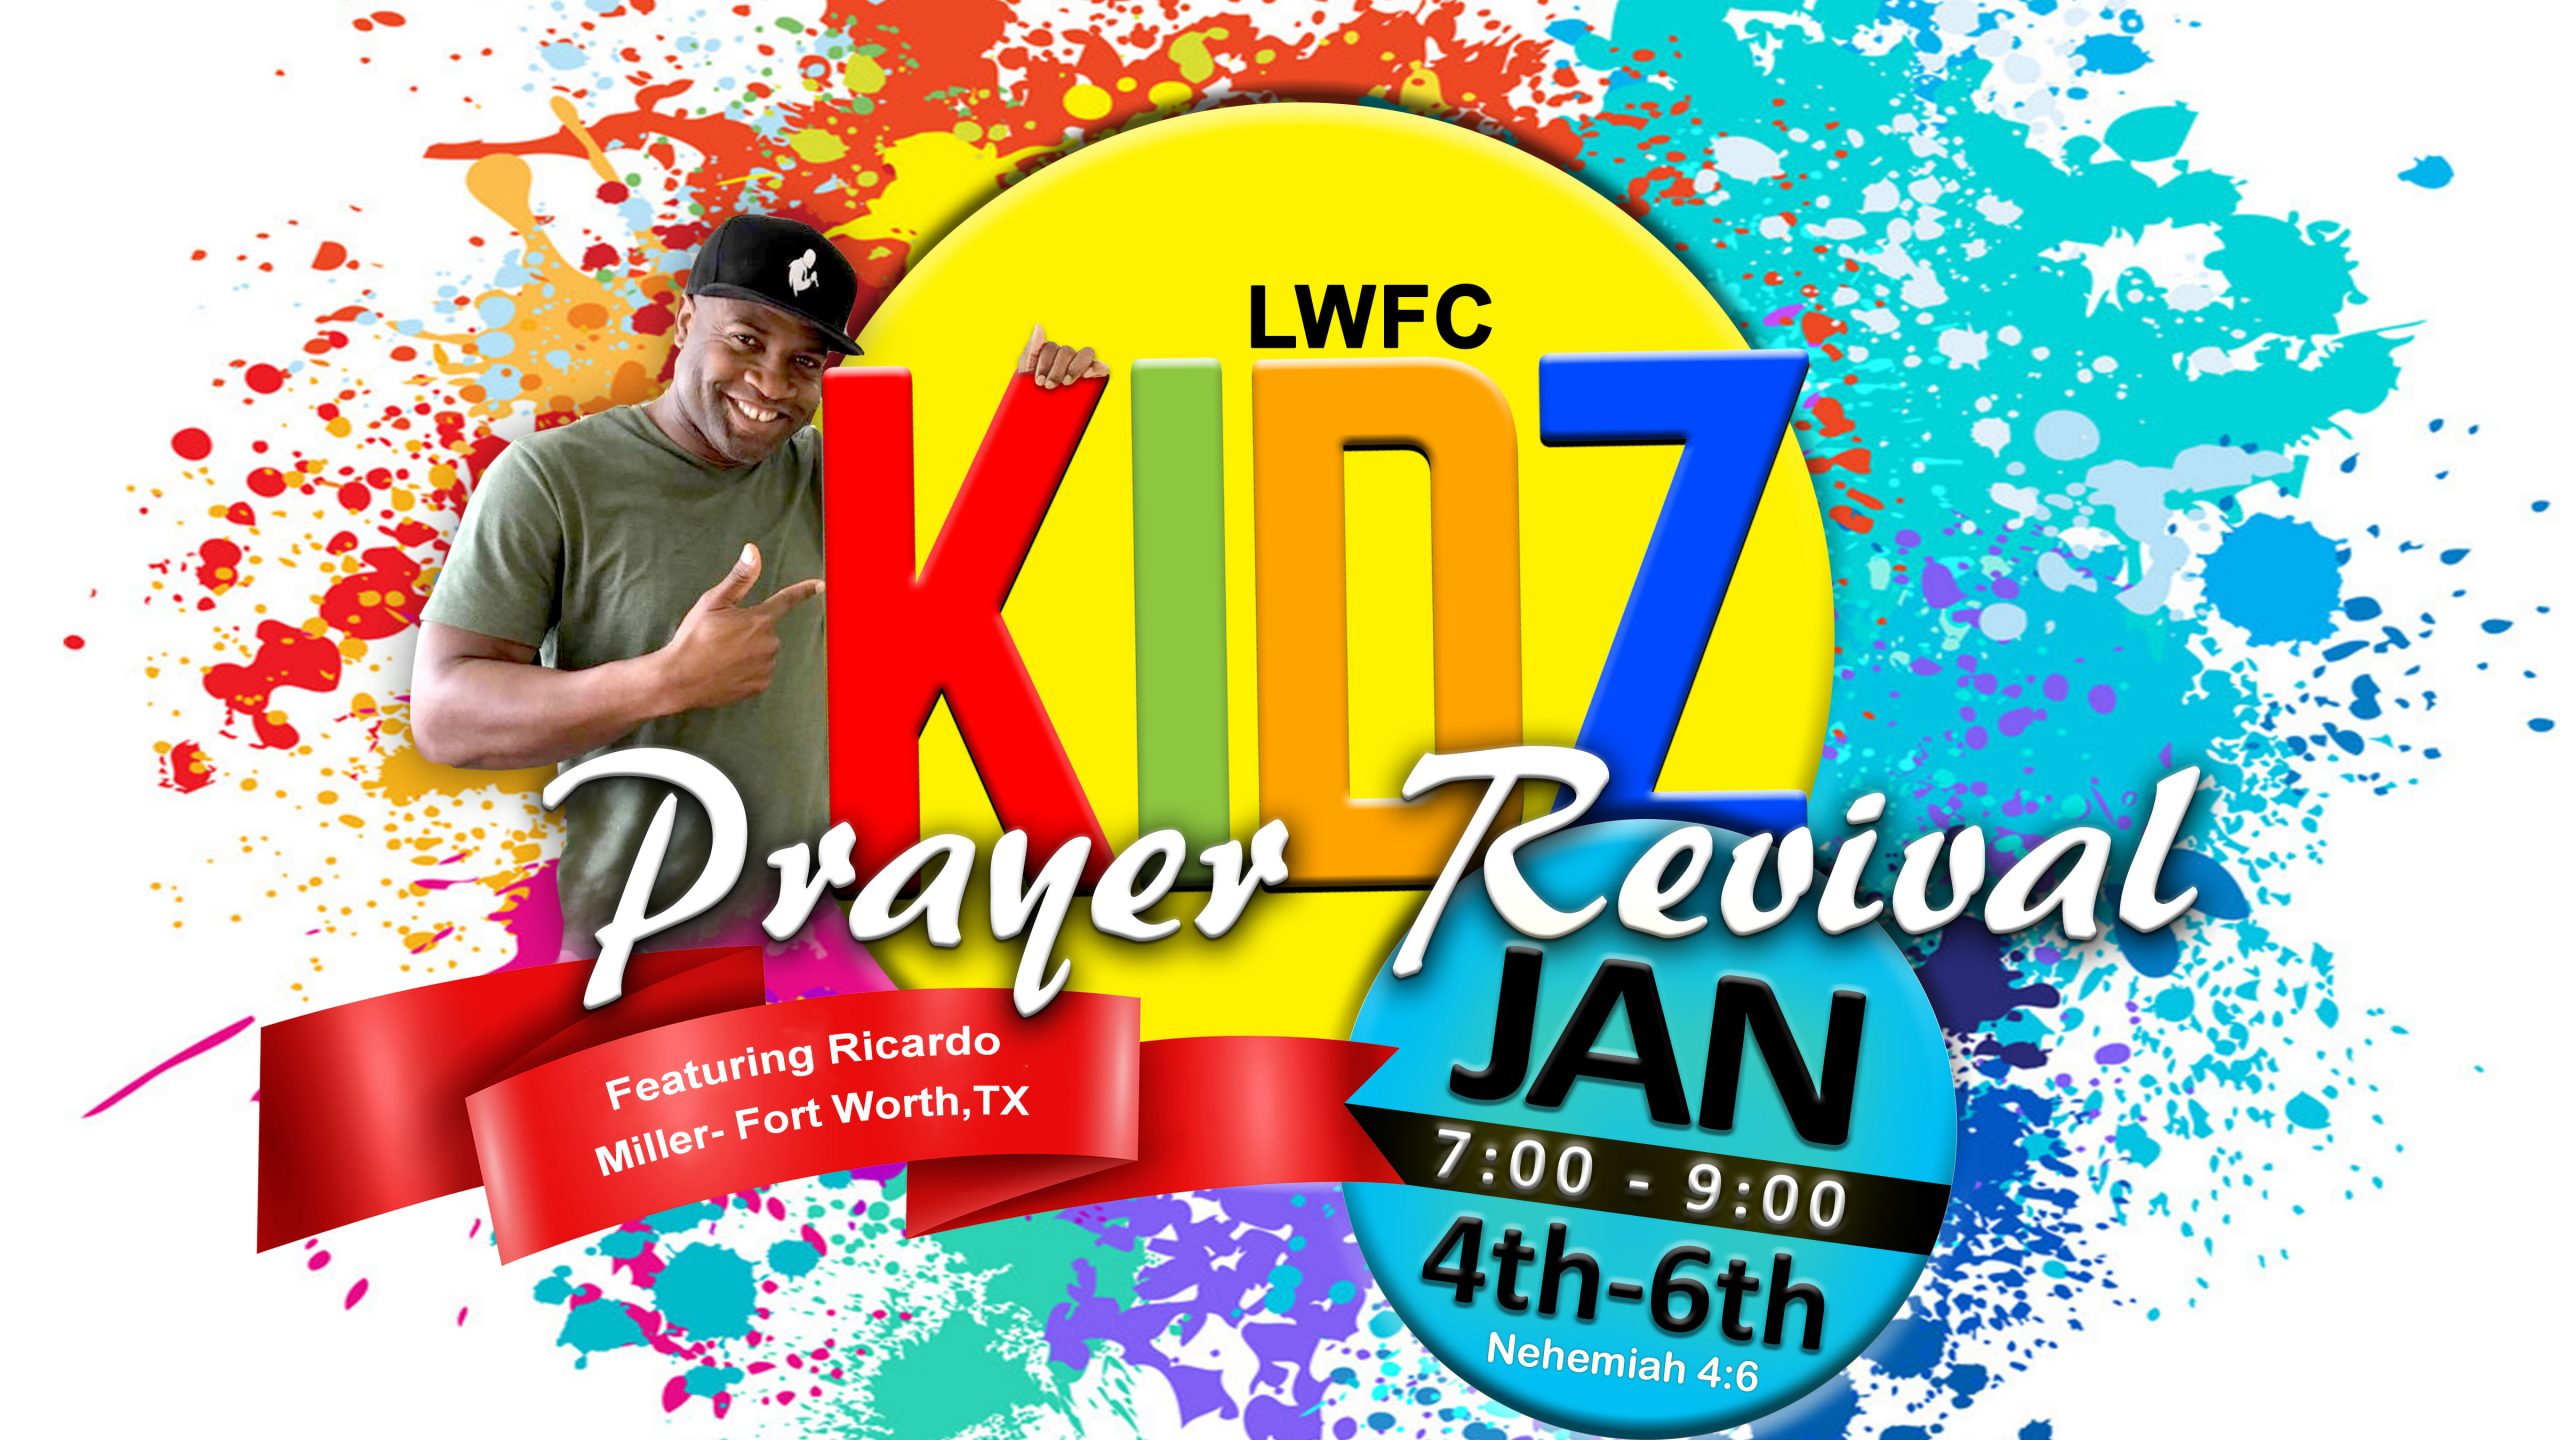 Kidz Prayer Revival 2022 – Jan. 4th-6th head image